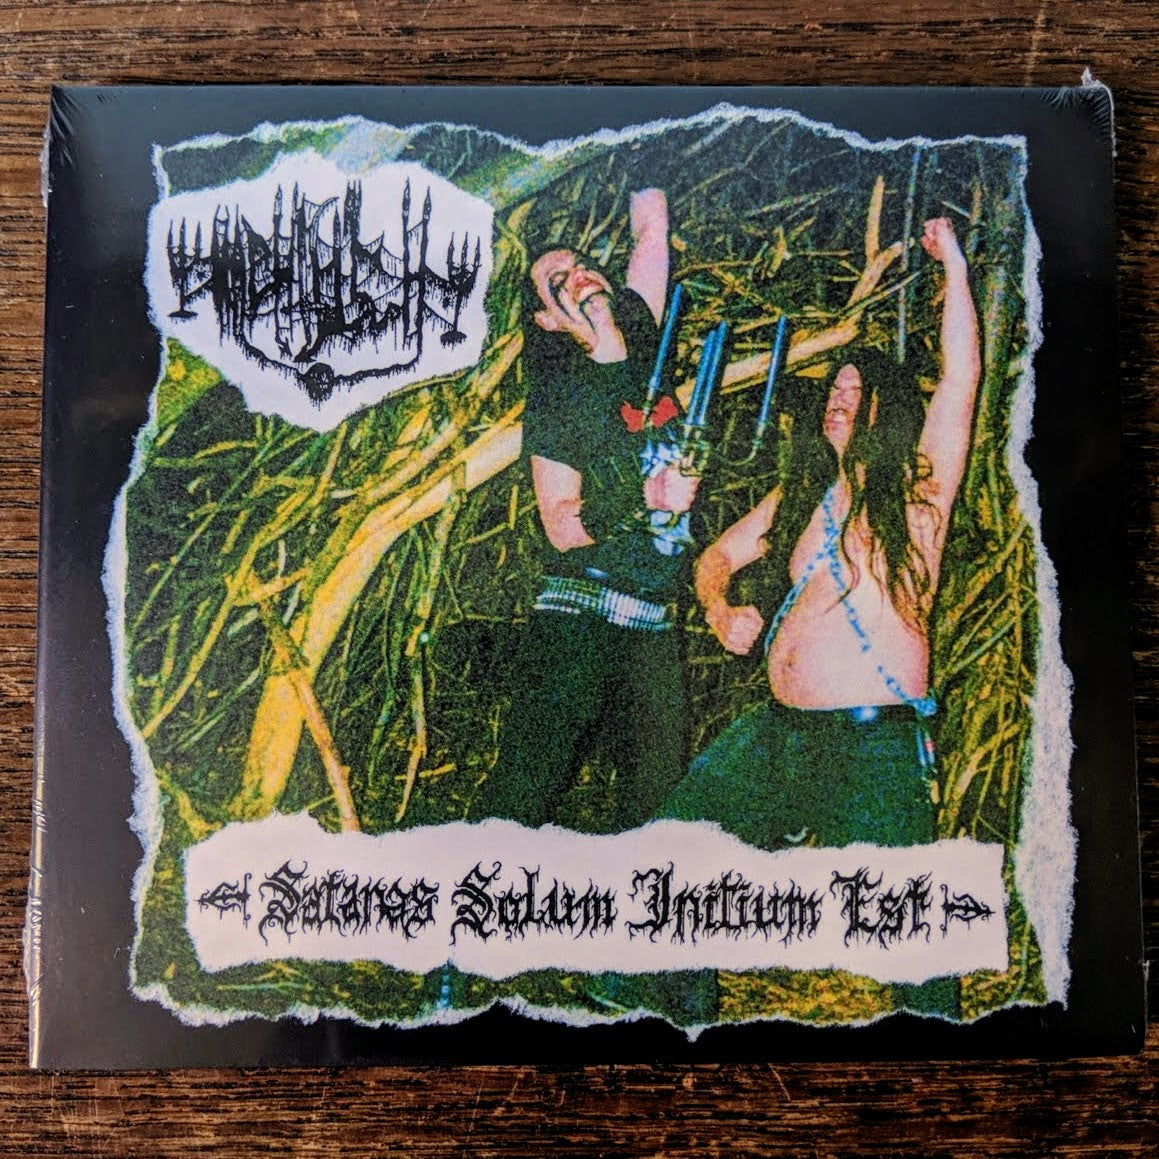 [SOLD OUT] NÄCHTLICH "Satanas Solum Initium Est" CD [Digipak]